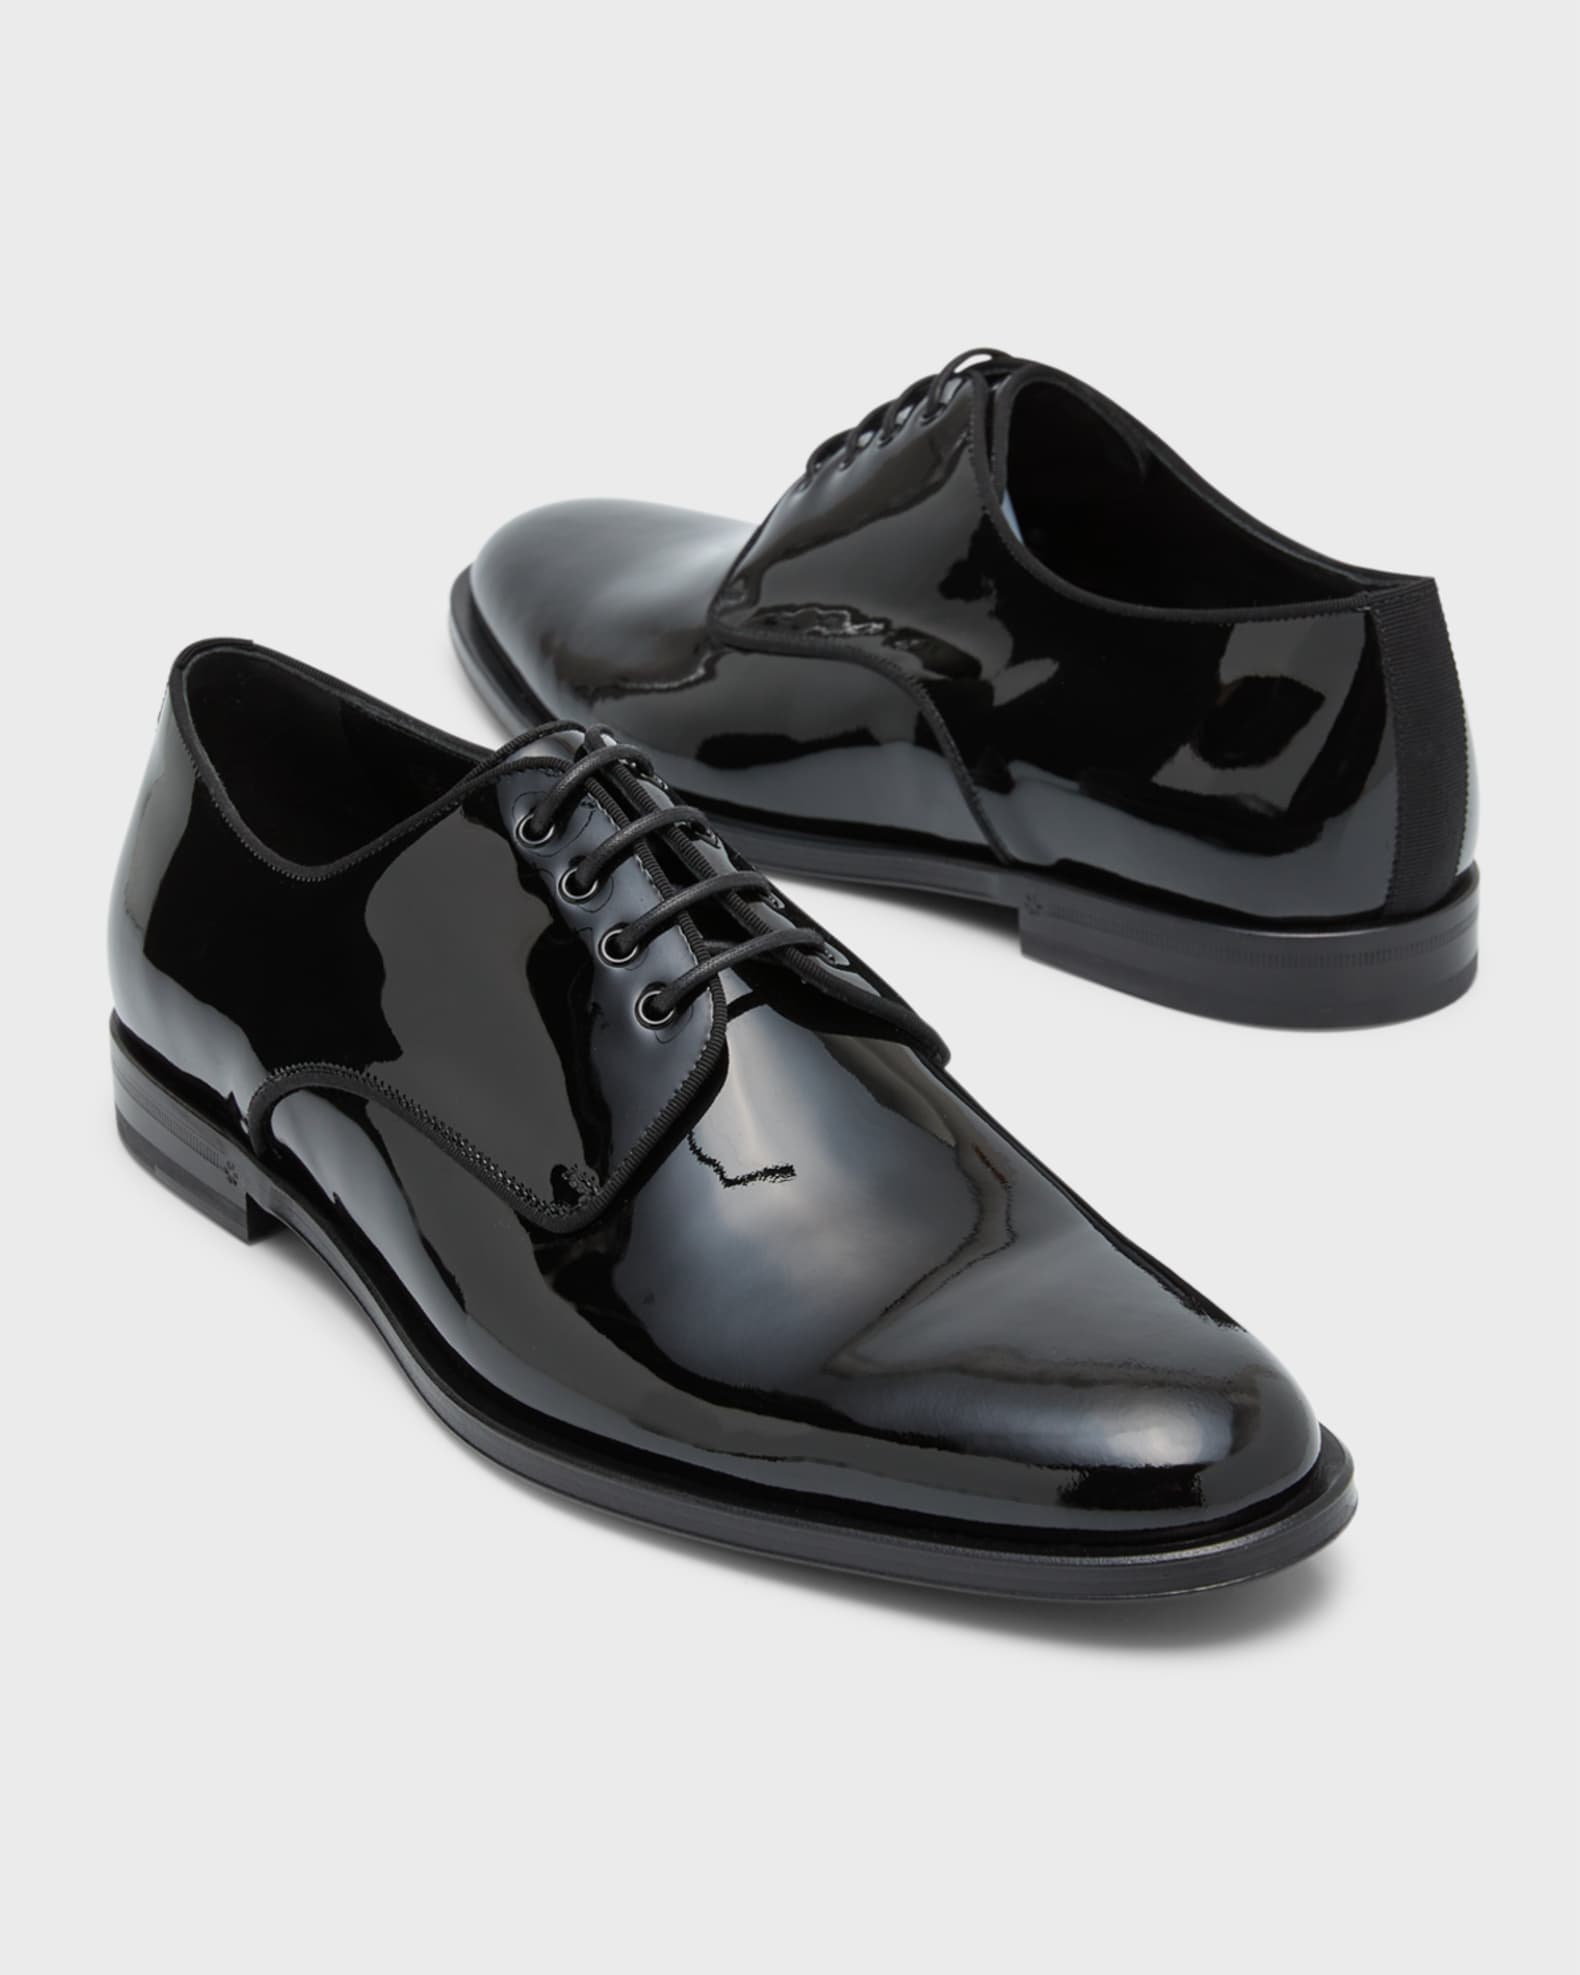 Dolce&Gabbana Men's Patent Leather Derby Shoes | Neiman Marcus